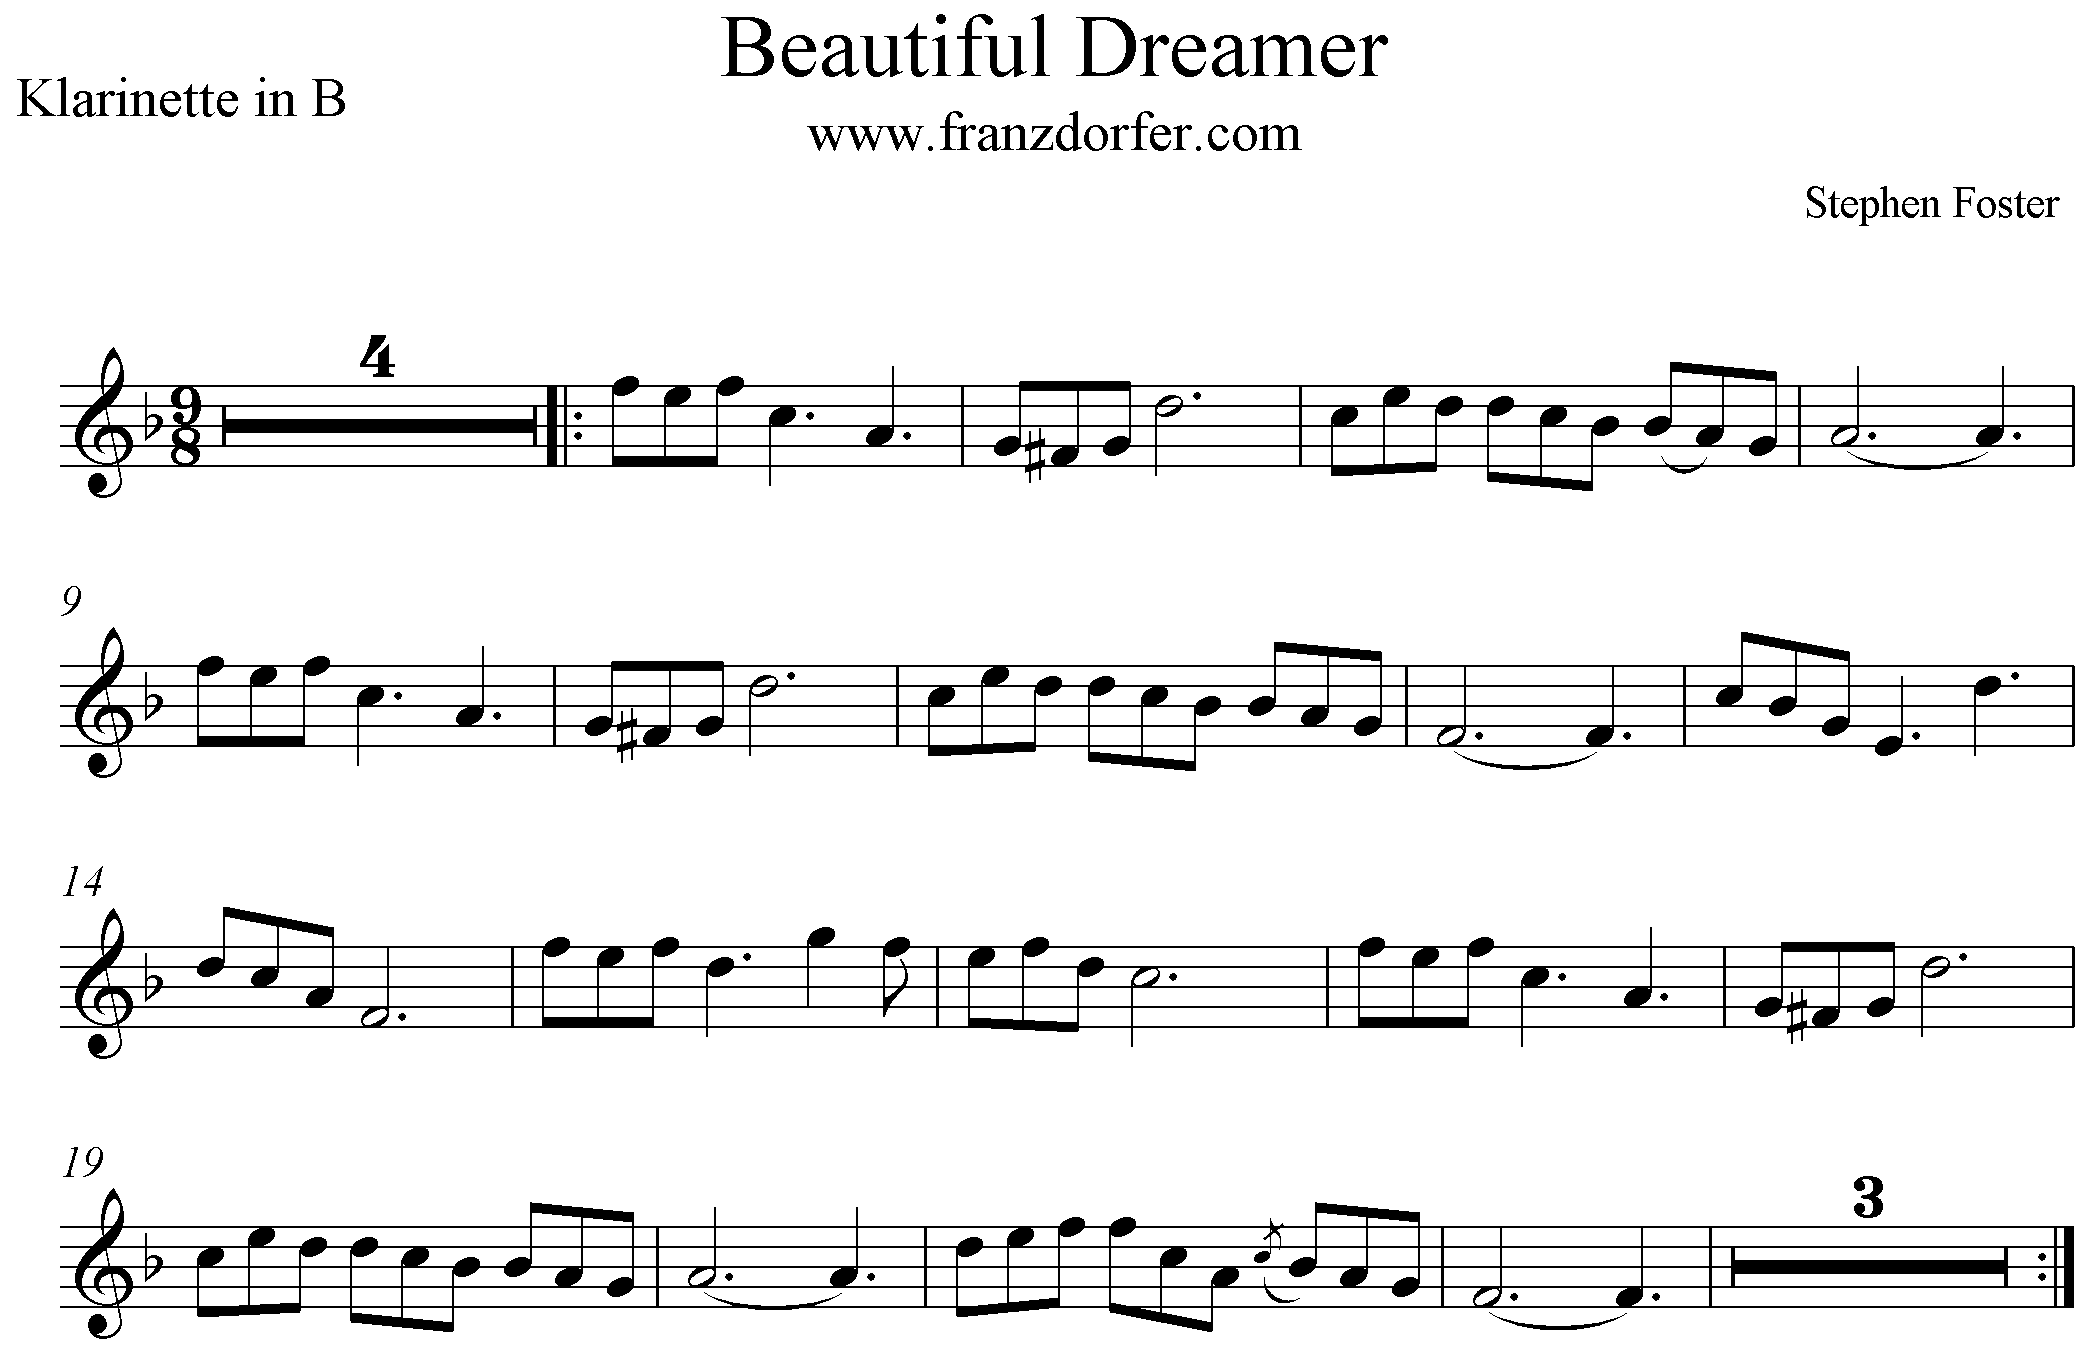 Sheetmusic for Trimpet, F-Major, Beautiful Dreamer